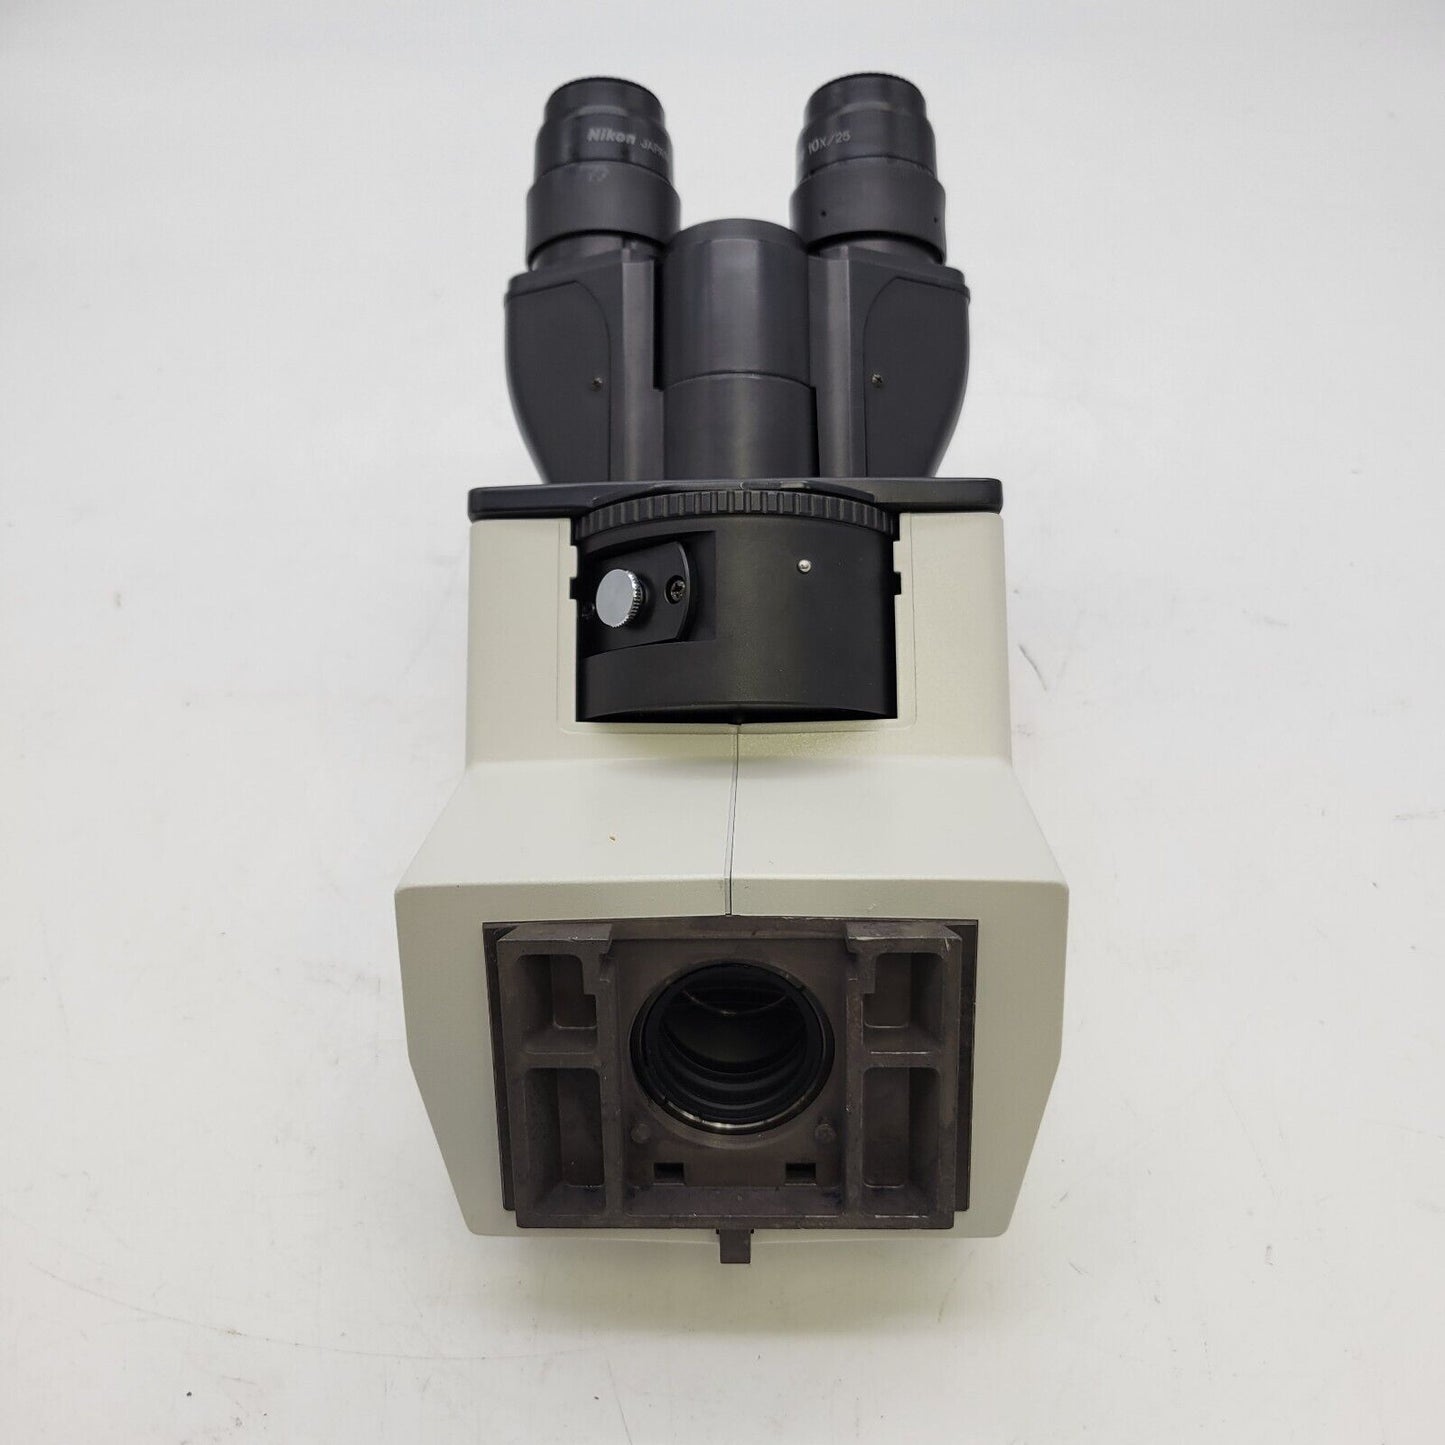 Nikon Microscope Binocular Head T-TD with Eyepieces and UV Shield - microscopemarketplace